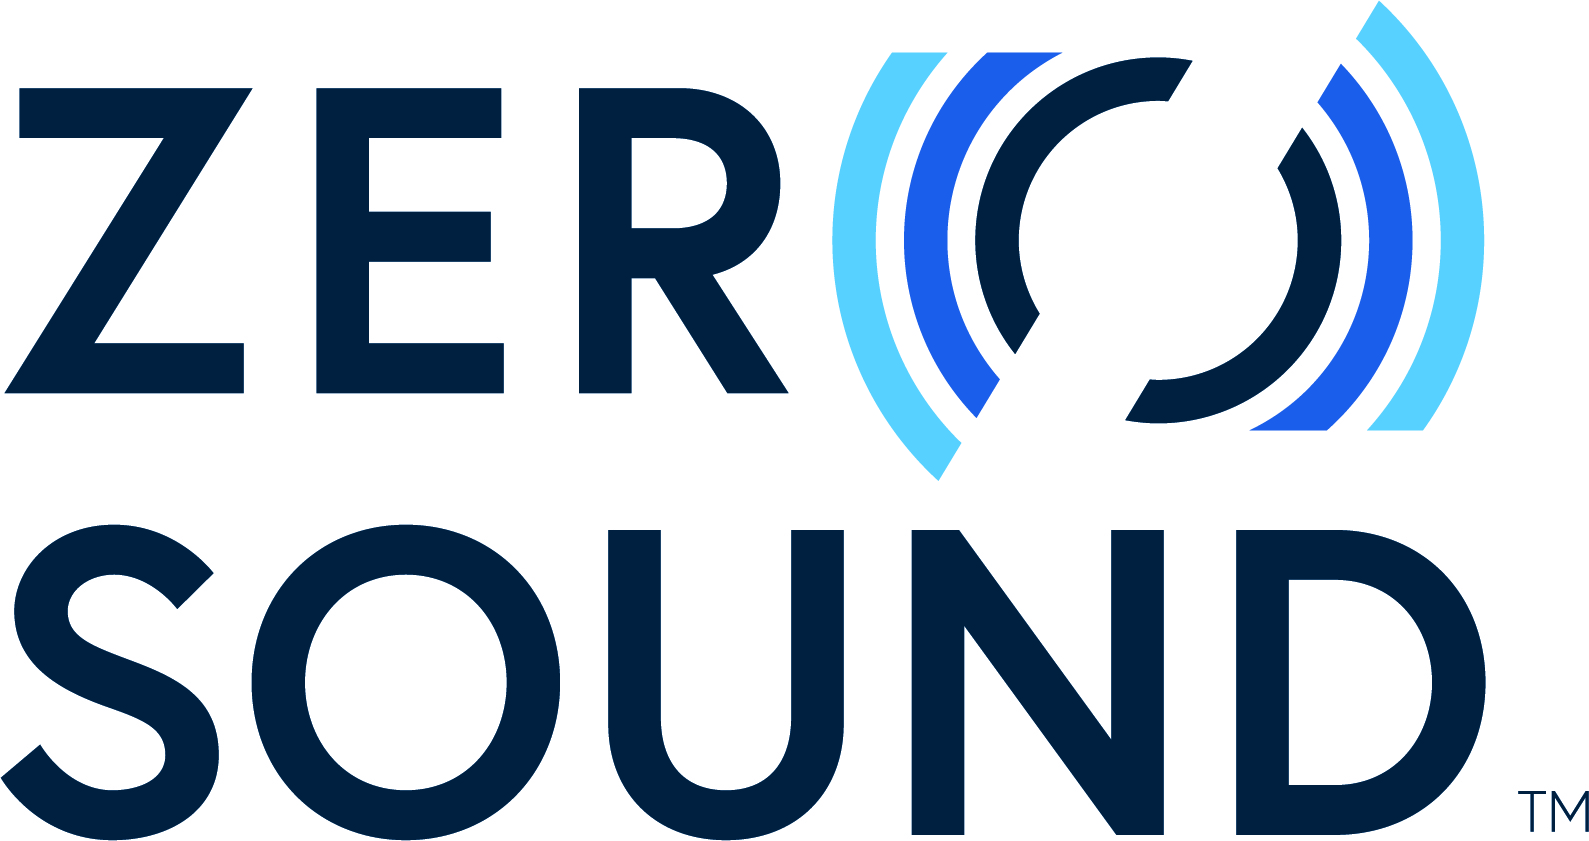 ZeroSound Logo